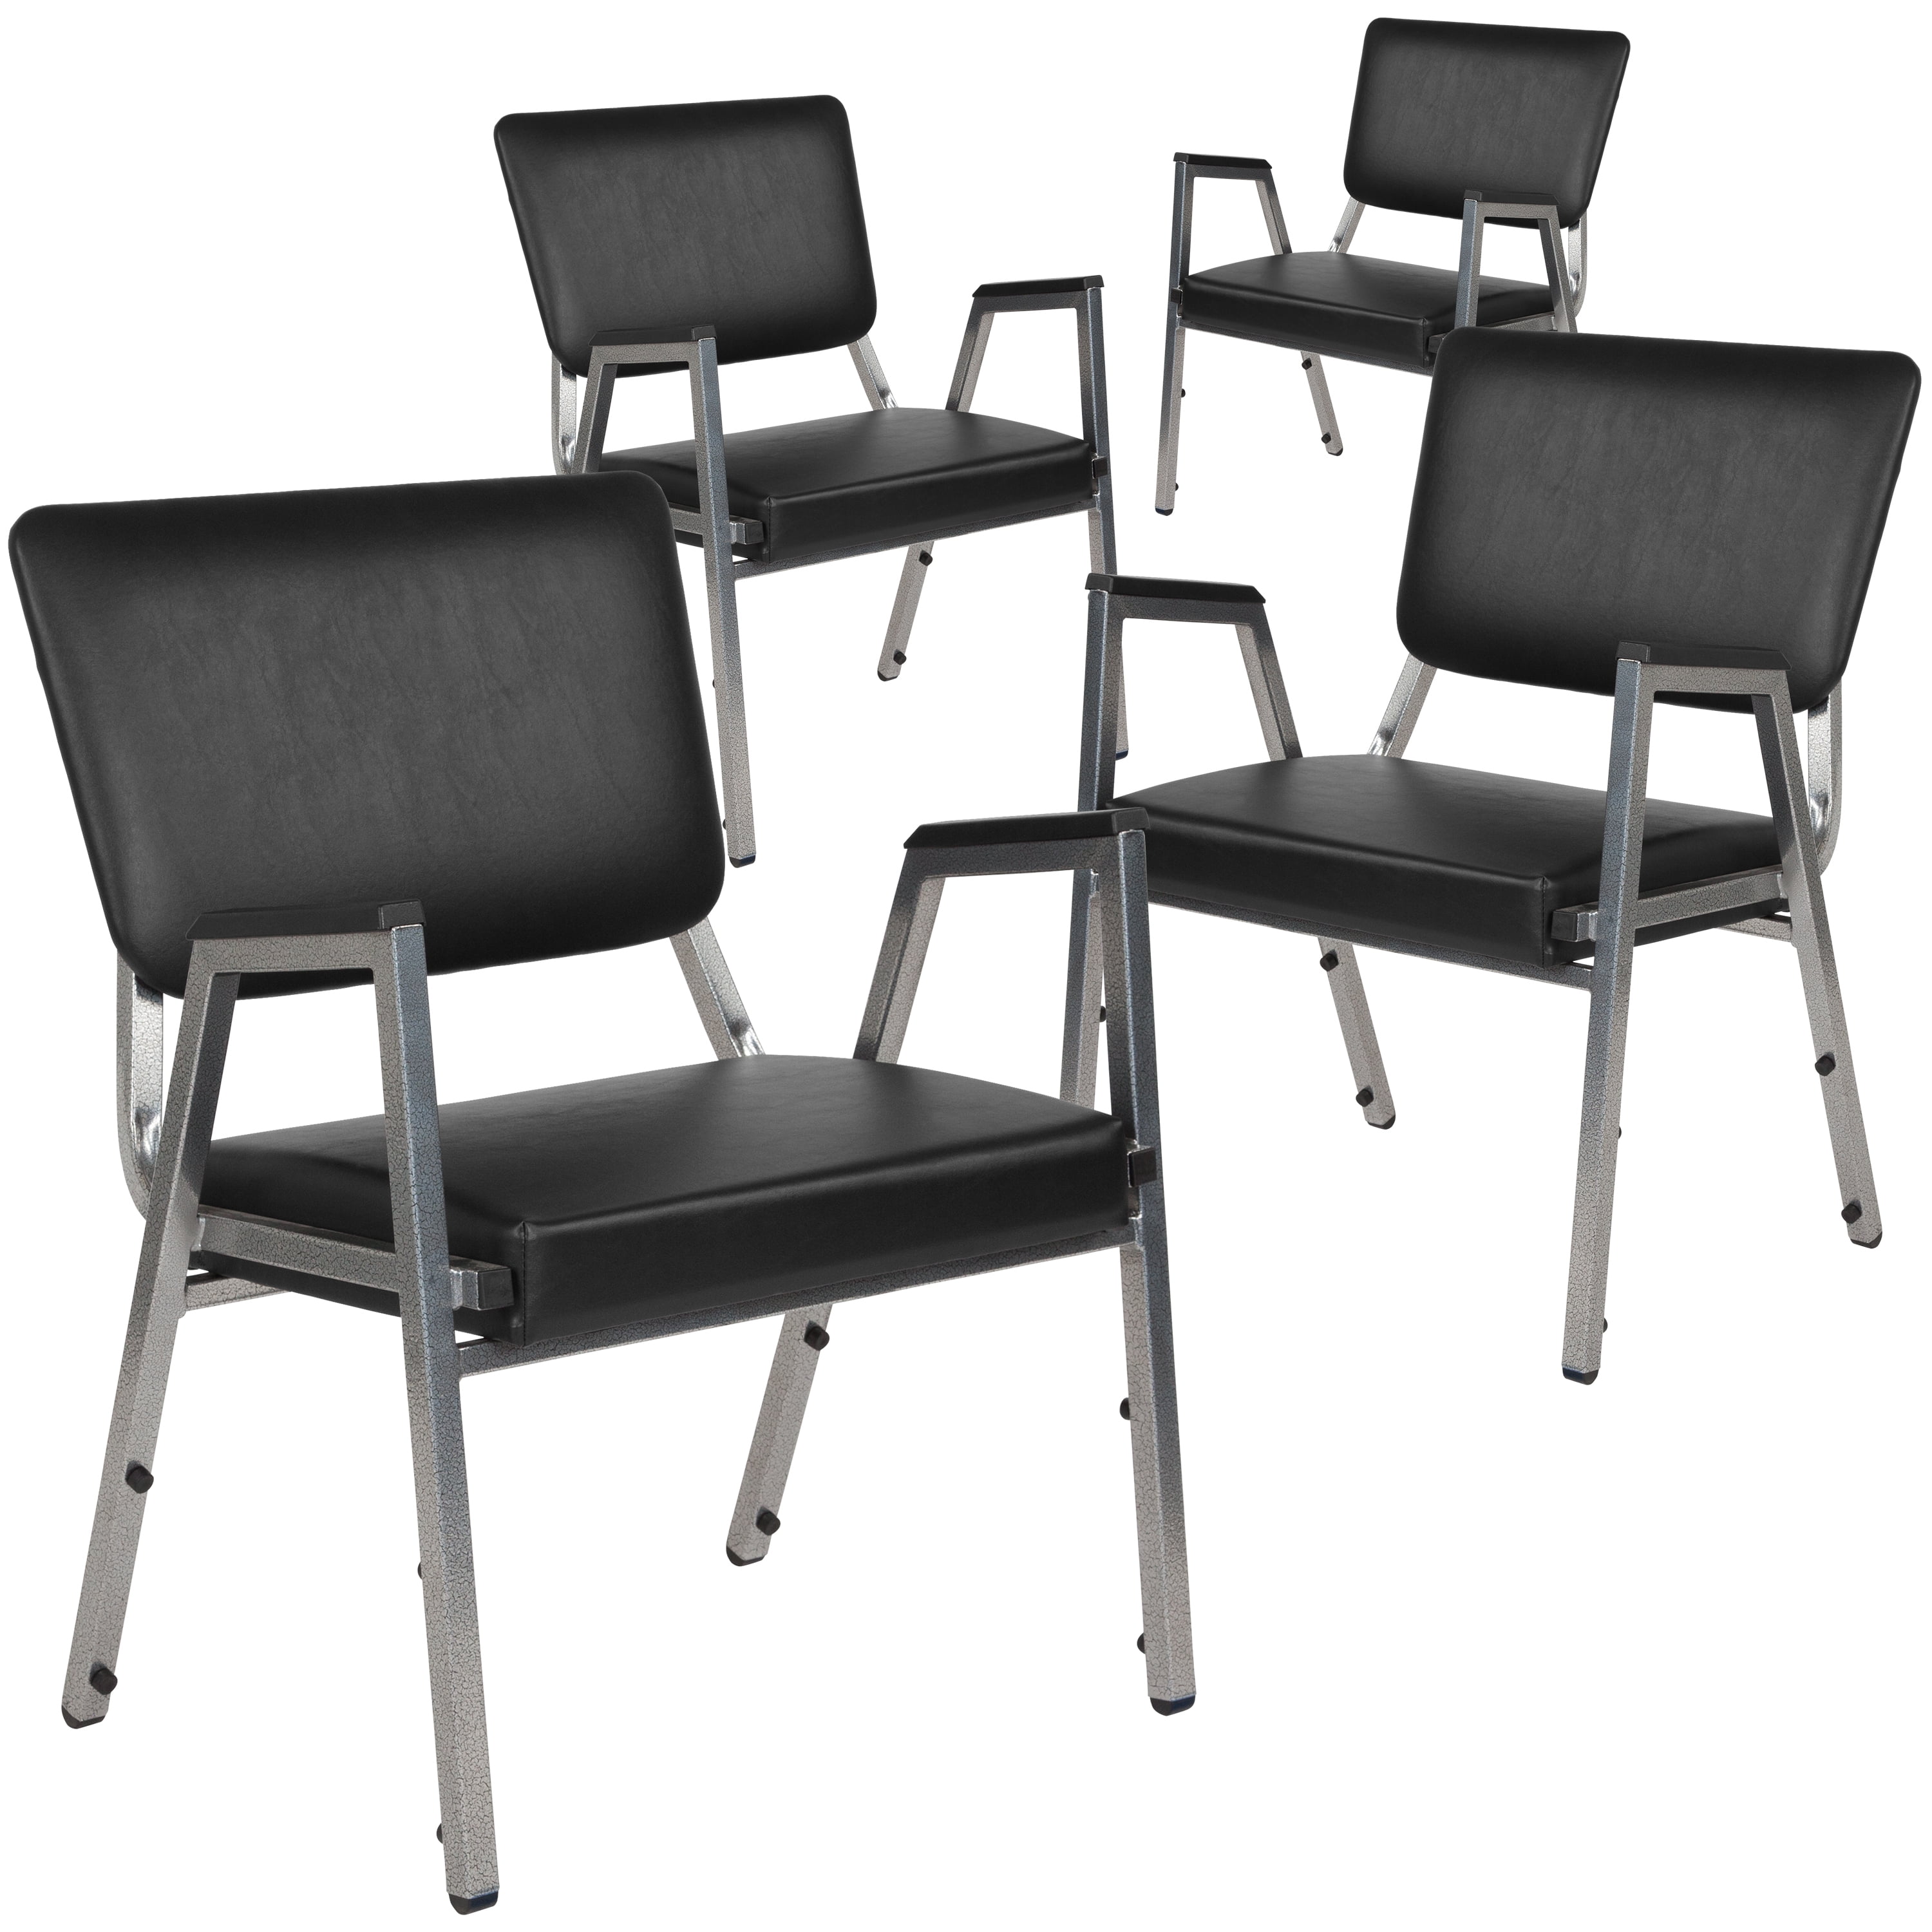 Rated Black Antimicrobial Vinyl Bariatric Medical Reception Chair Flash Furniture 4 Pack HERCULES Series 1500 lb 